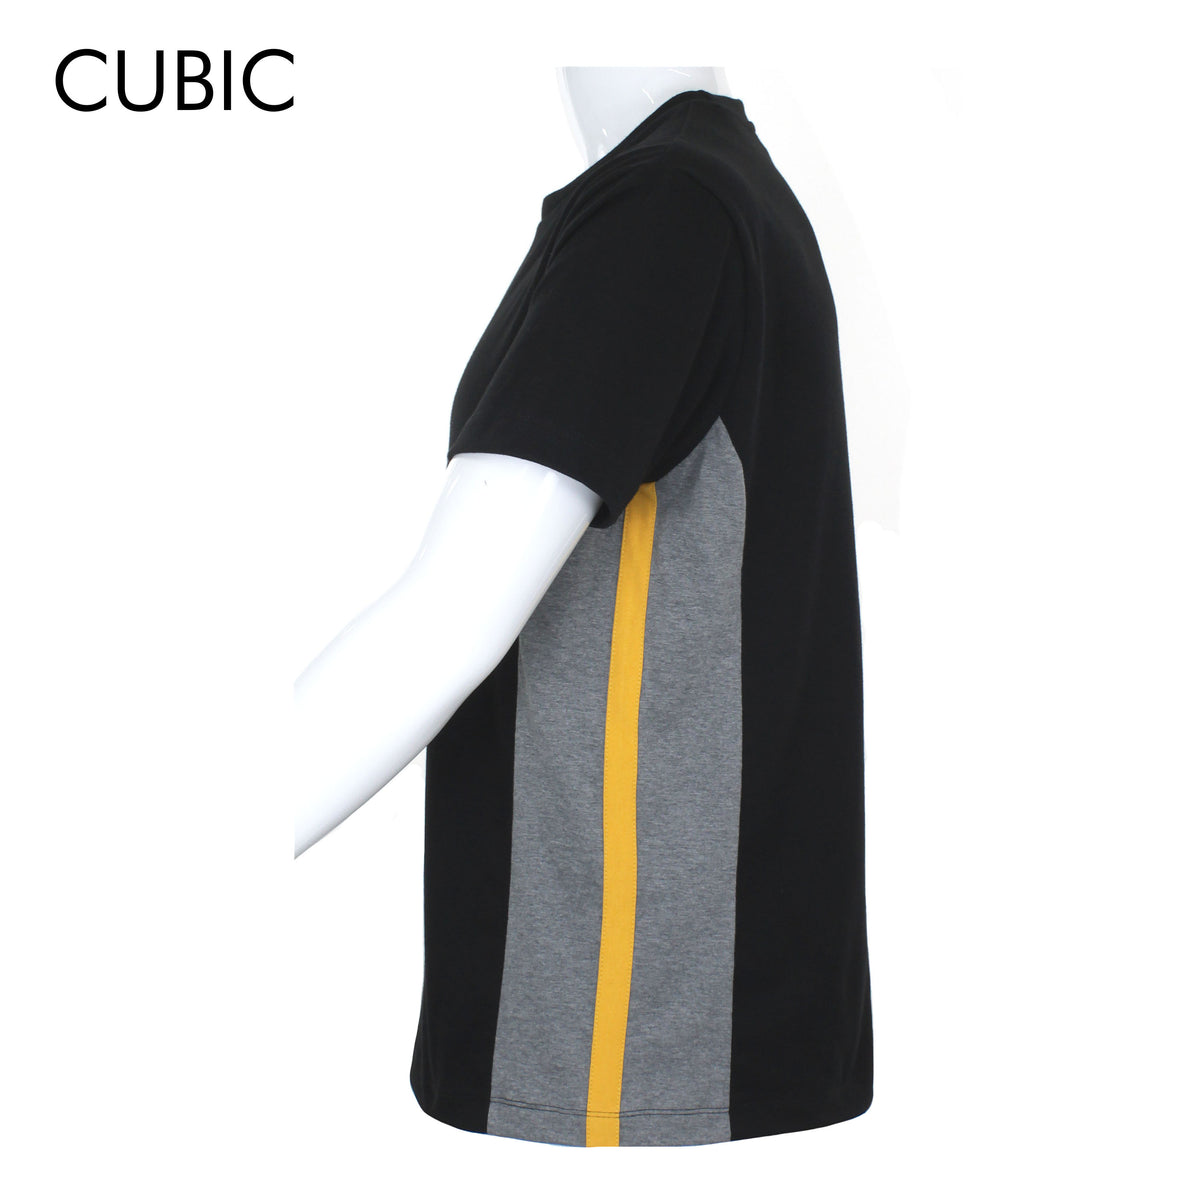 Cubic Men Round Neck Tees T-shirt Jersey Shirt Top Top for Men - CMJ2236R